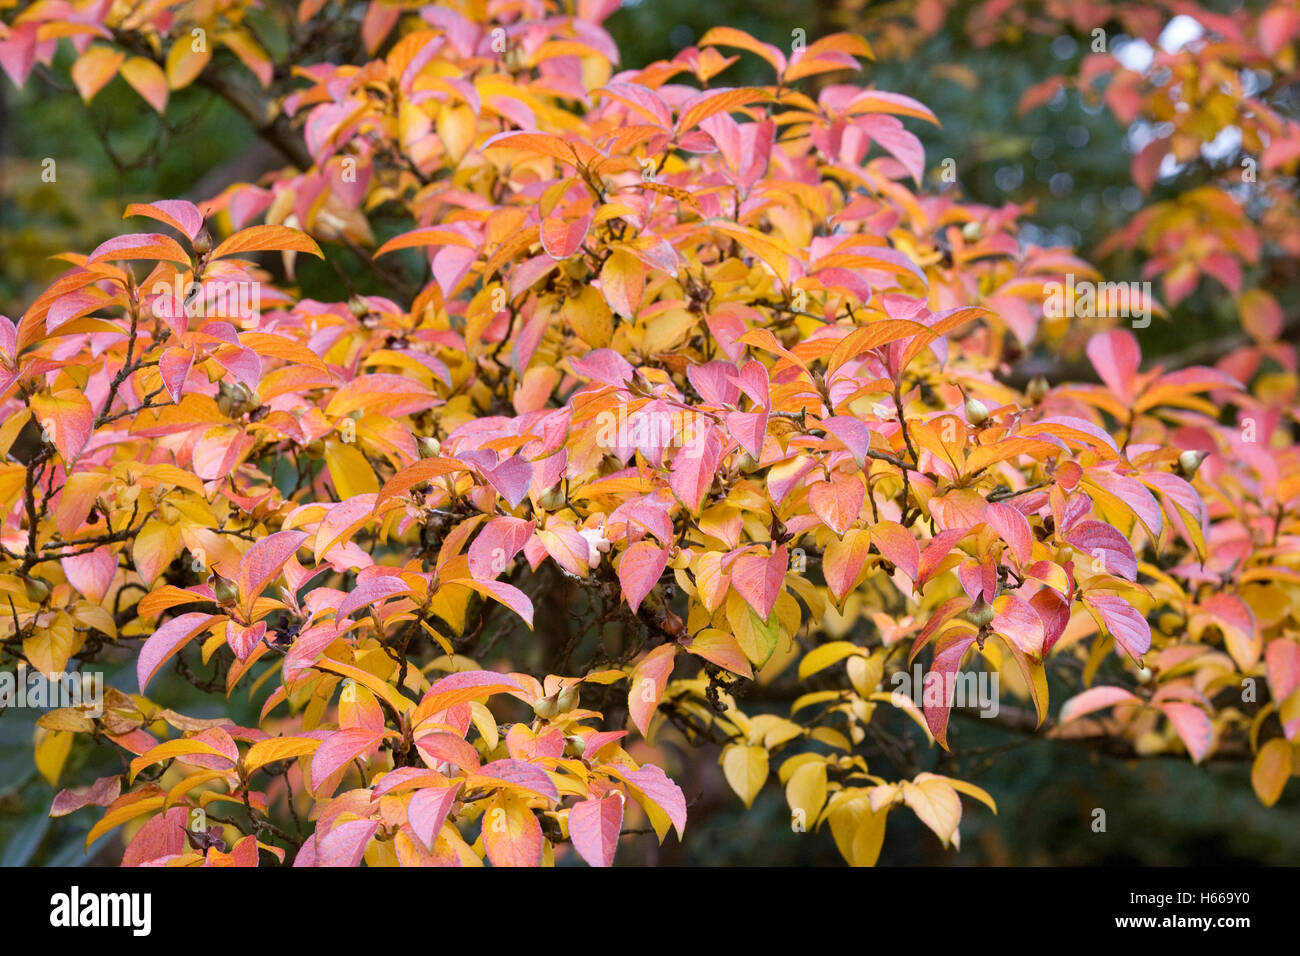 Stewartia pseudocamellia. Autumn leaves of the deciduous camellia. Stock Photo